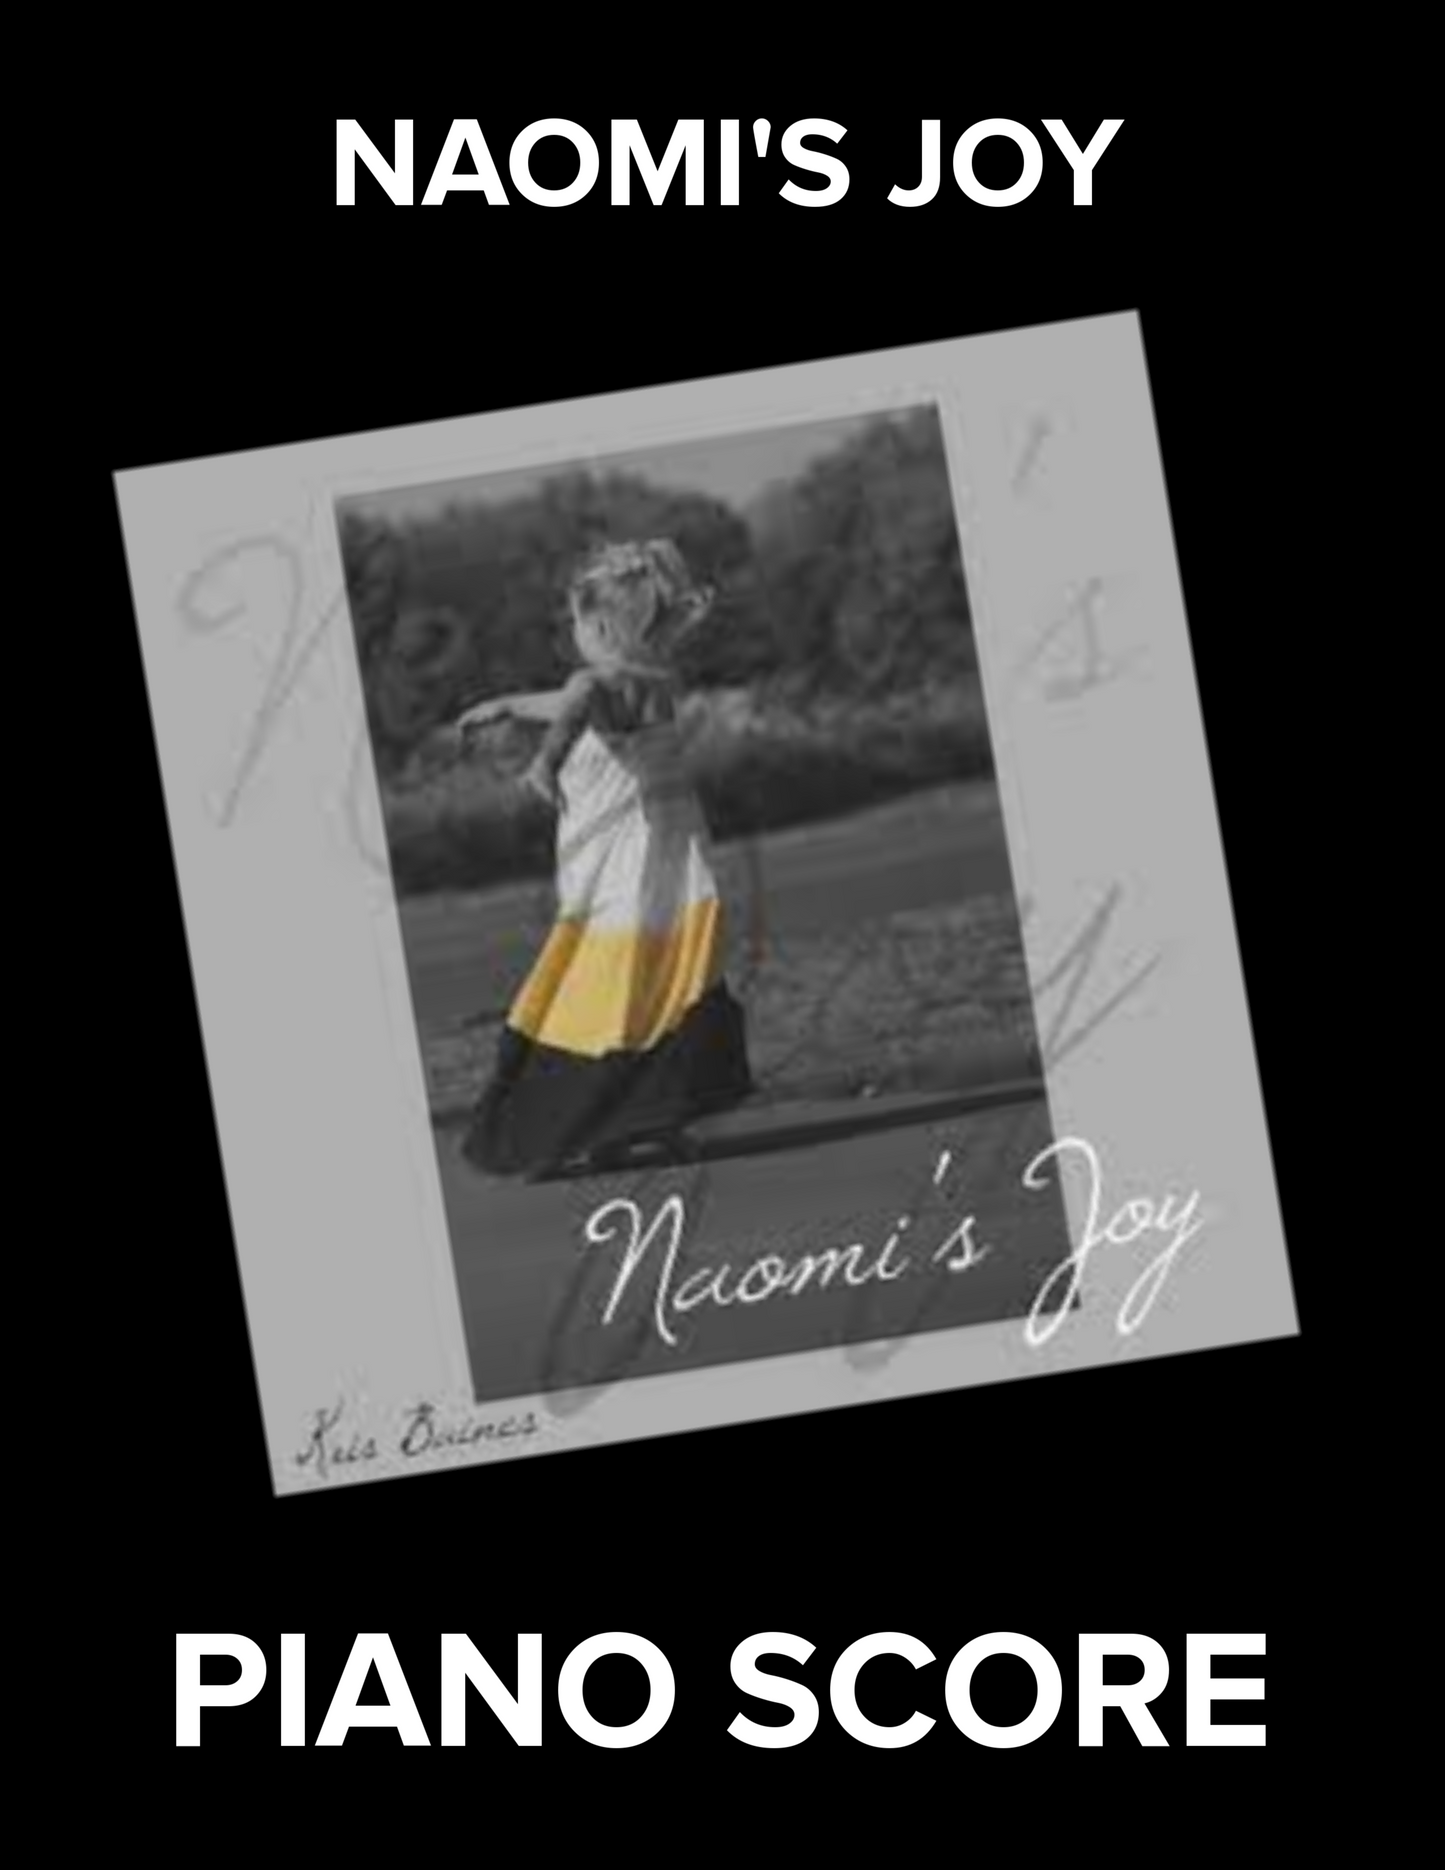 "Naomi's Joy' - Solo Piano Score